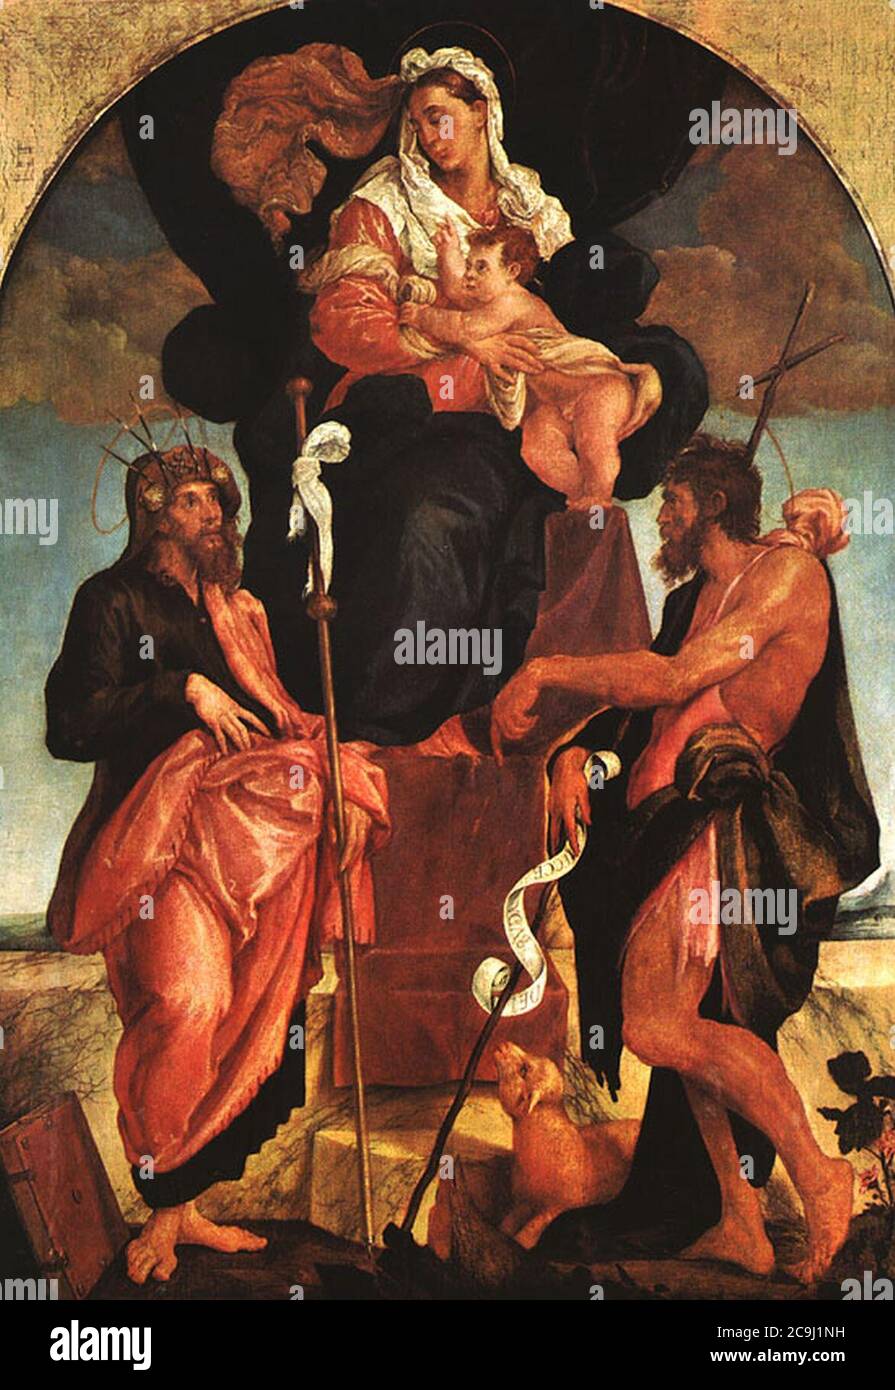 Jacopo Bassano - Altarpiece, 1545-50, originally painted for the Church at Tomo, canvas, Pinakothek at Munich. Stock Photo